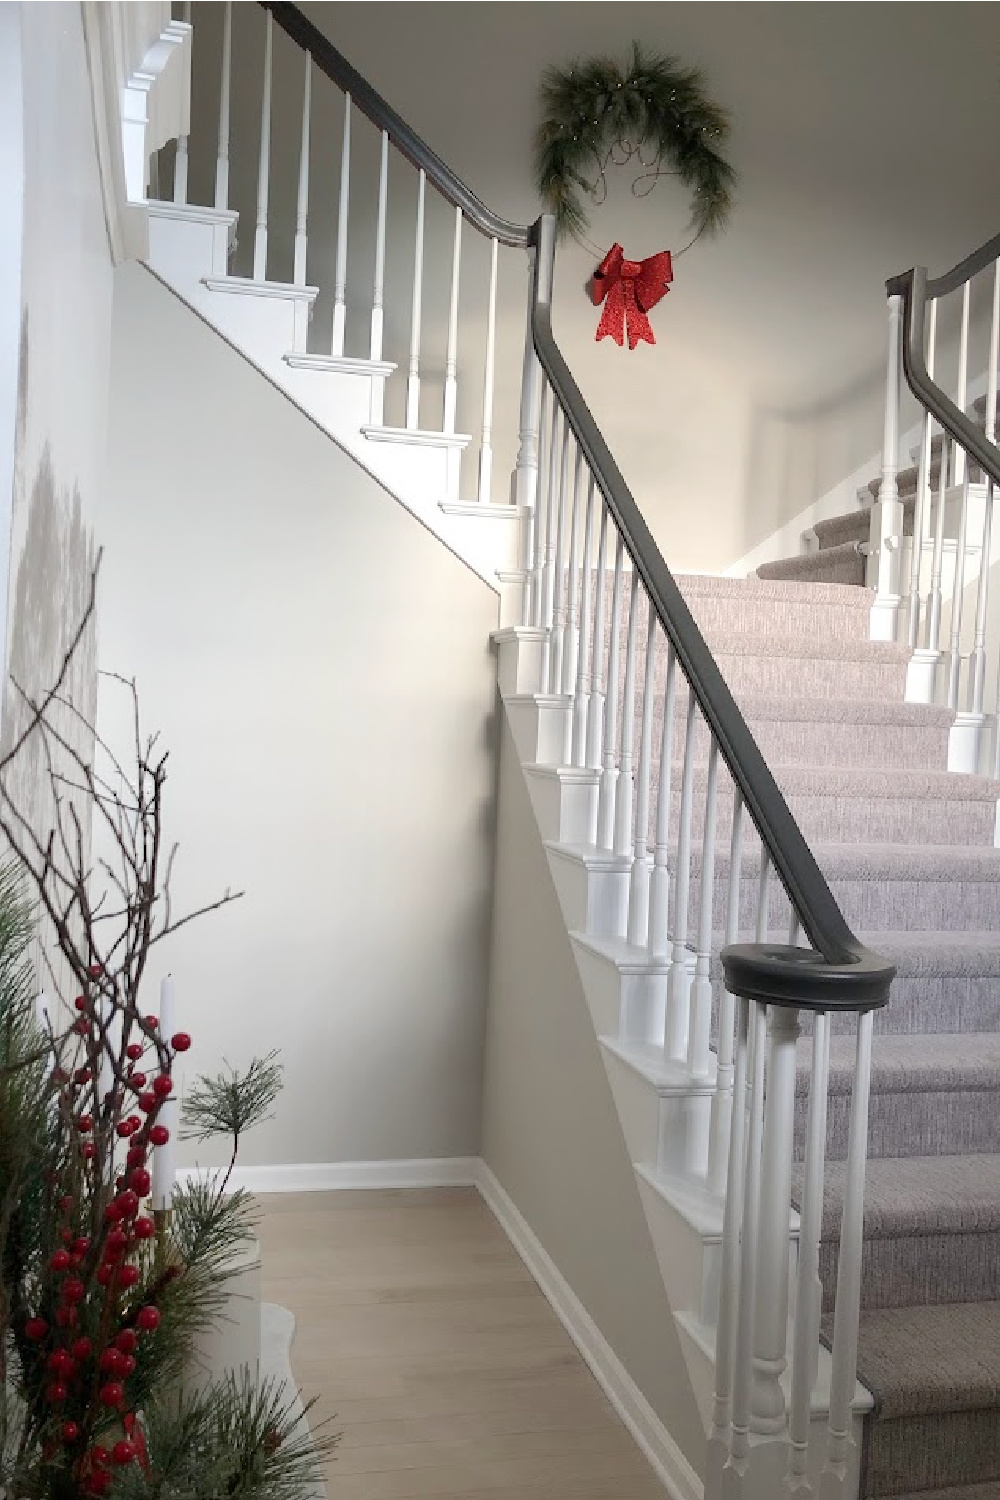 Prelit joy wreath at top of staircase - Hello Lovely Studio. #holidaywreath #joywreath